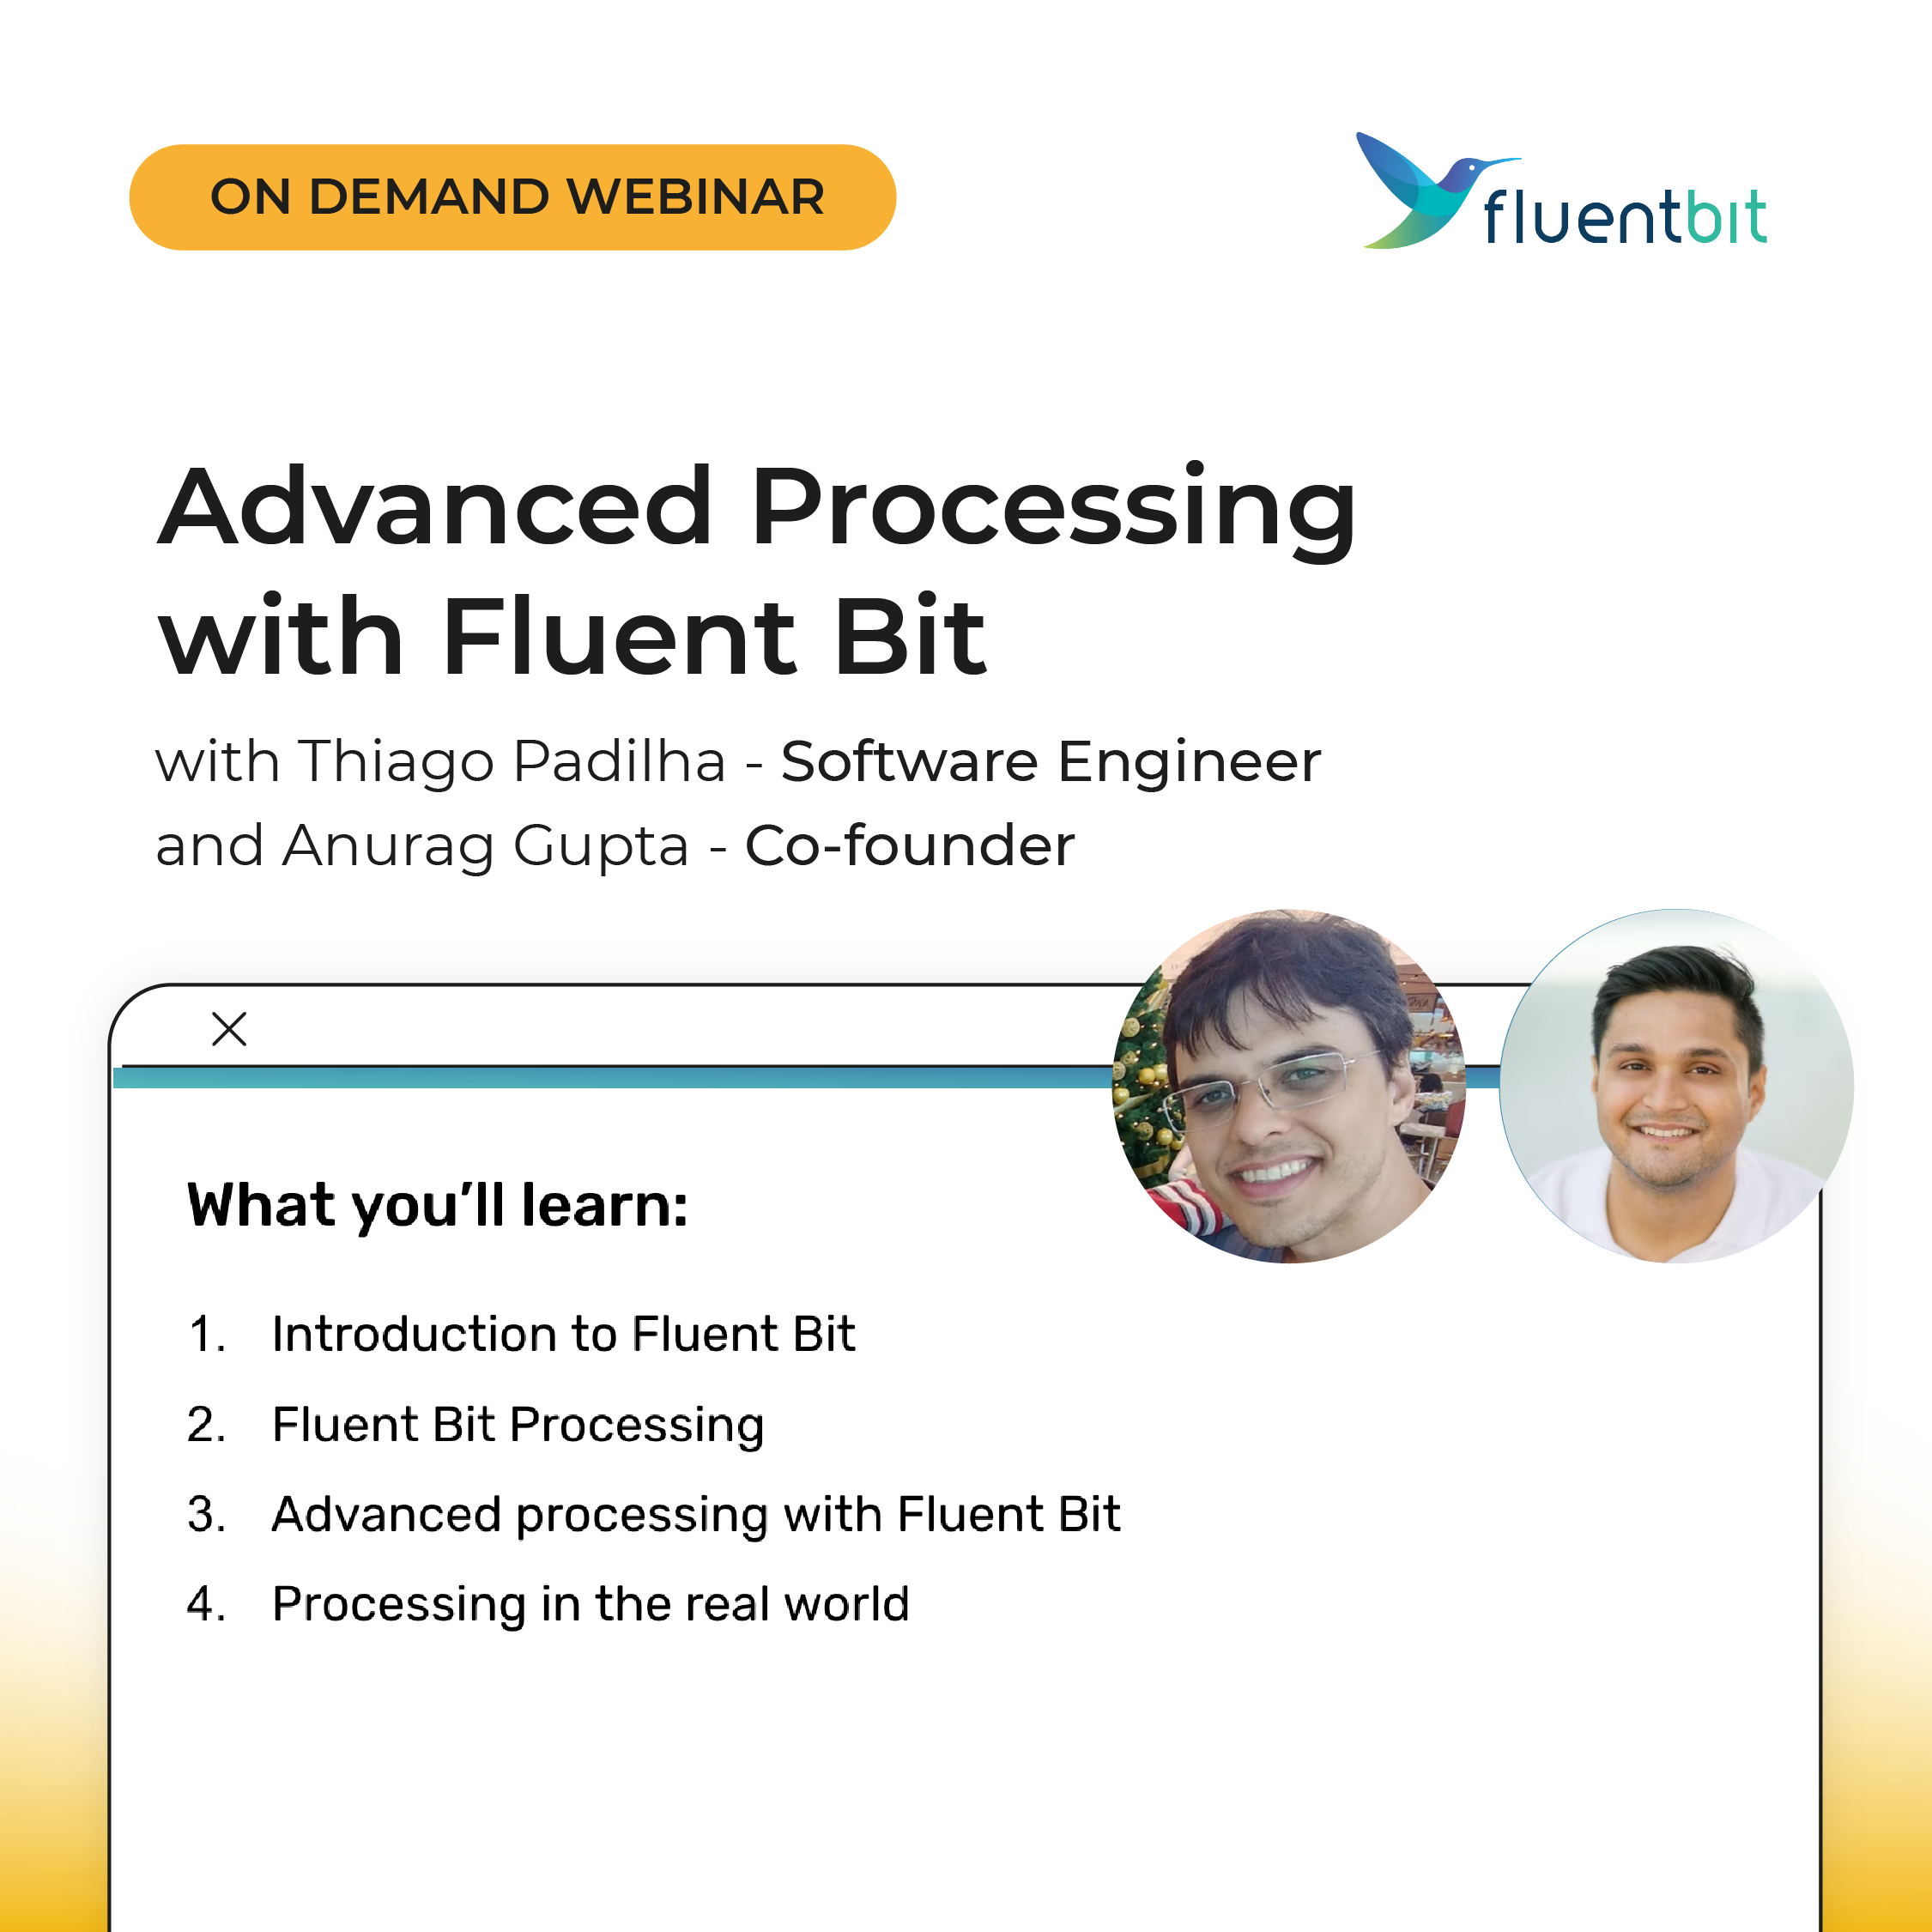 On-demand webinar: Advanced processing with Fluent Bit